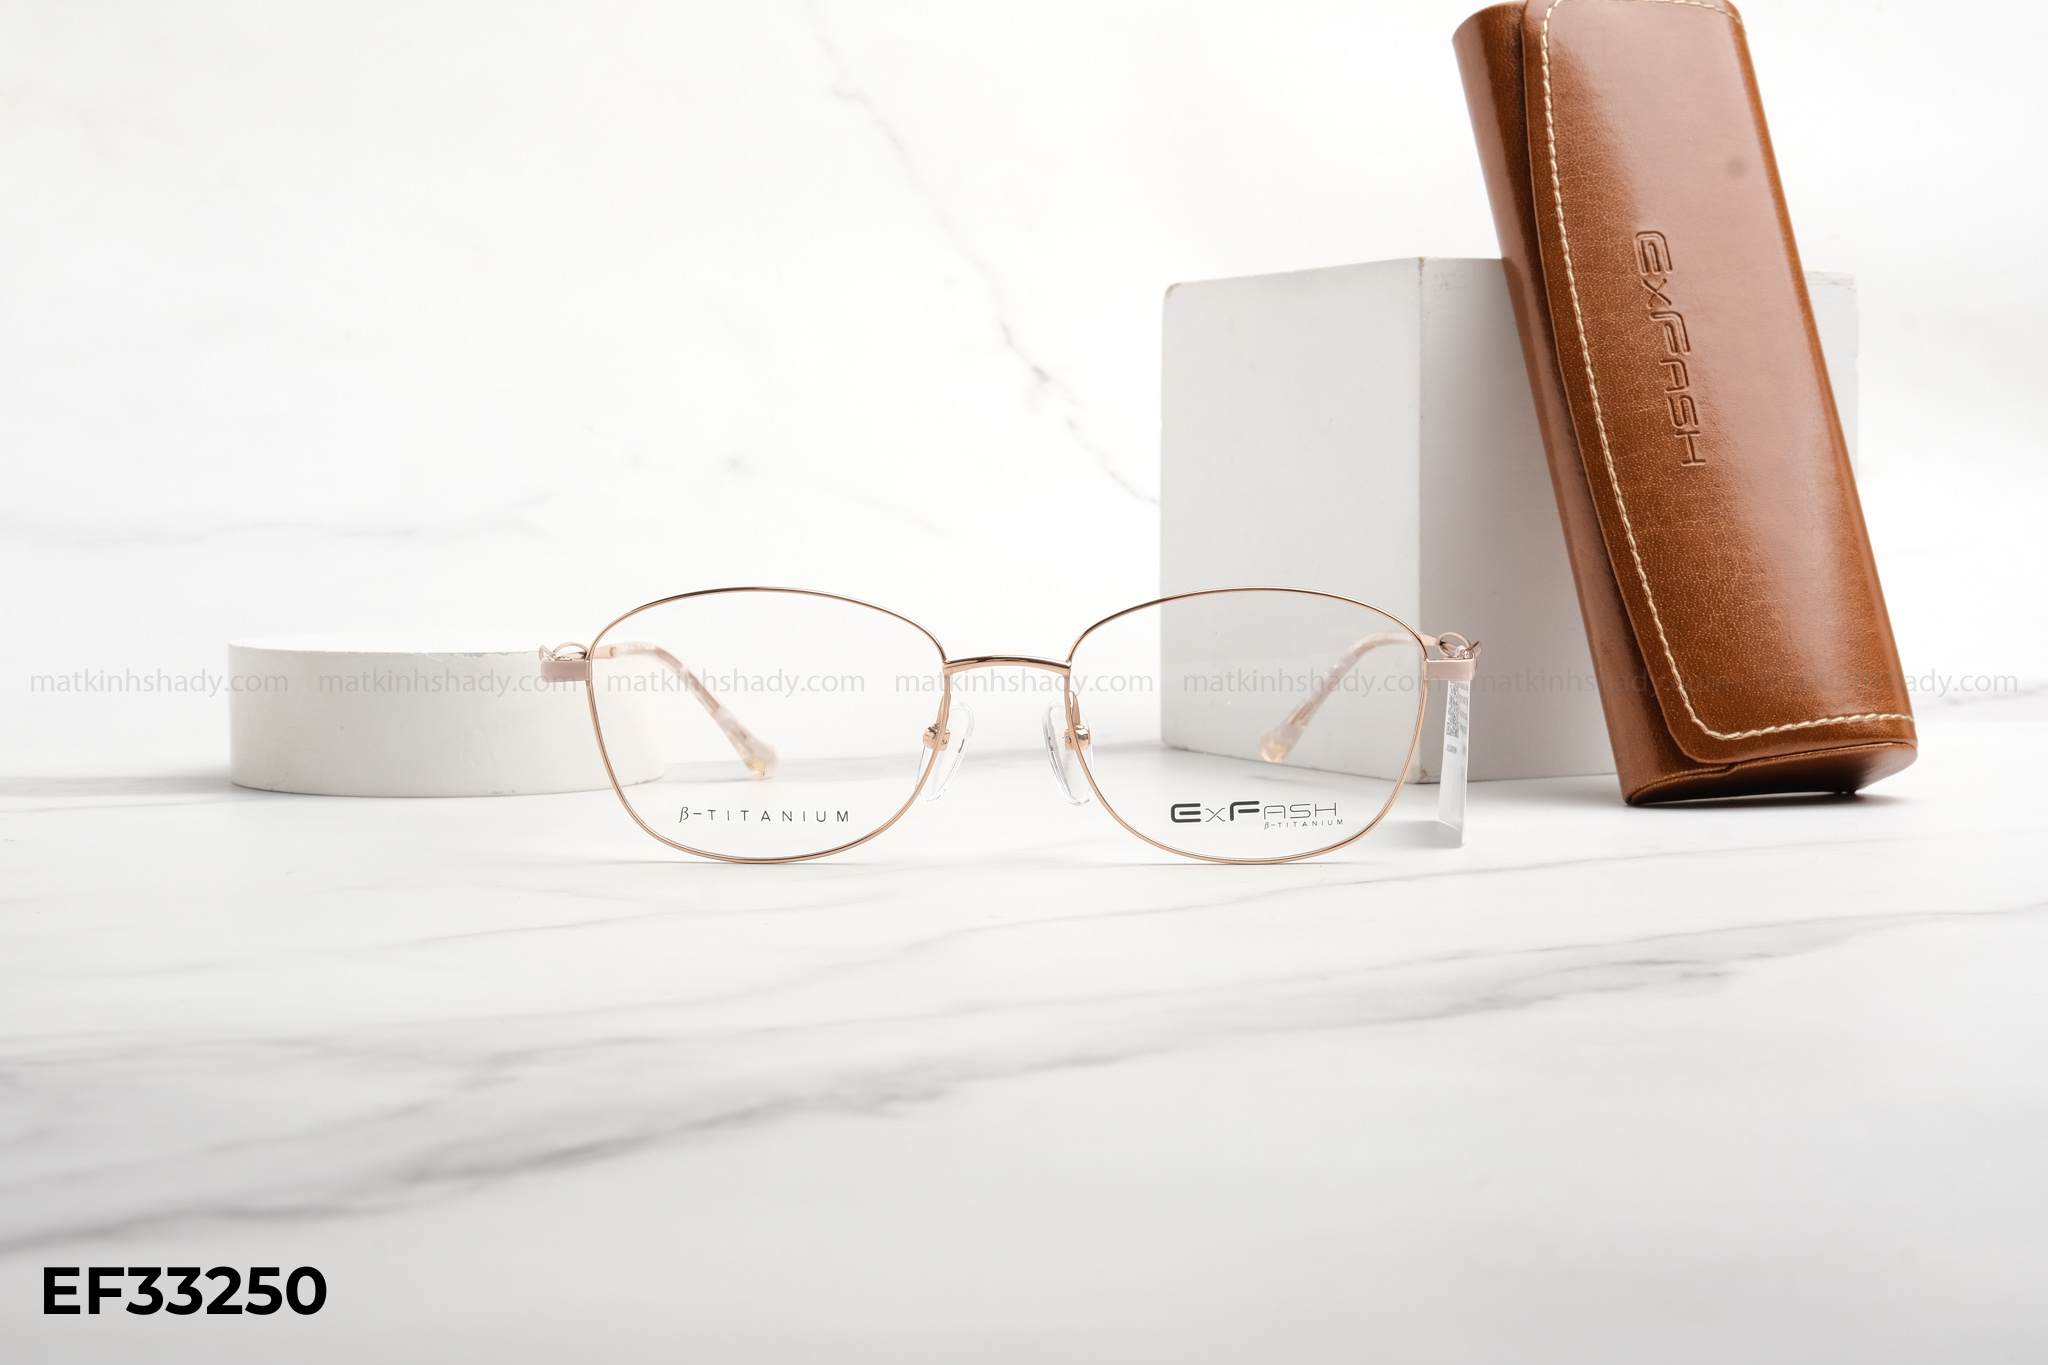  Exfash Eyewear - Glasses - EF33250 